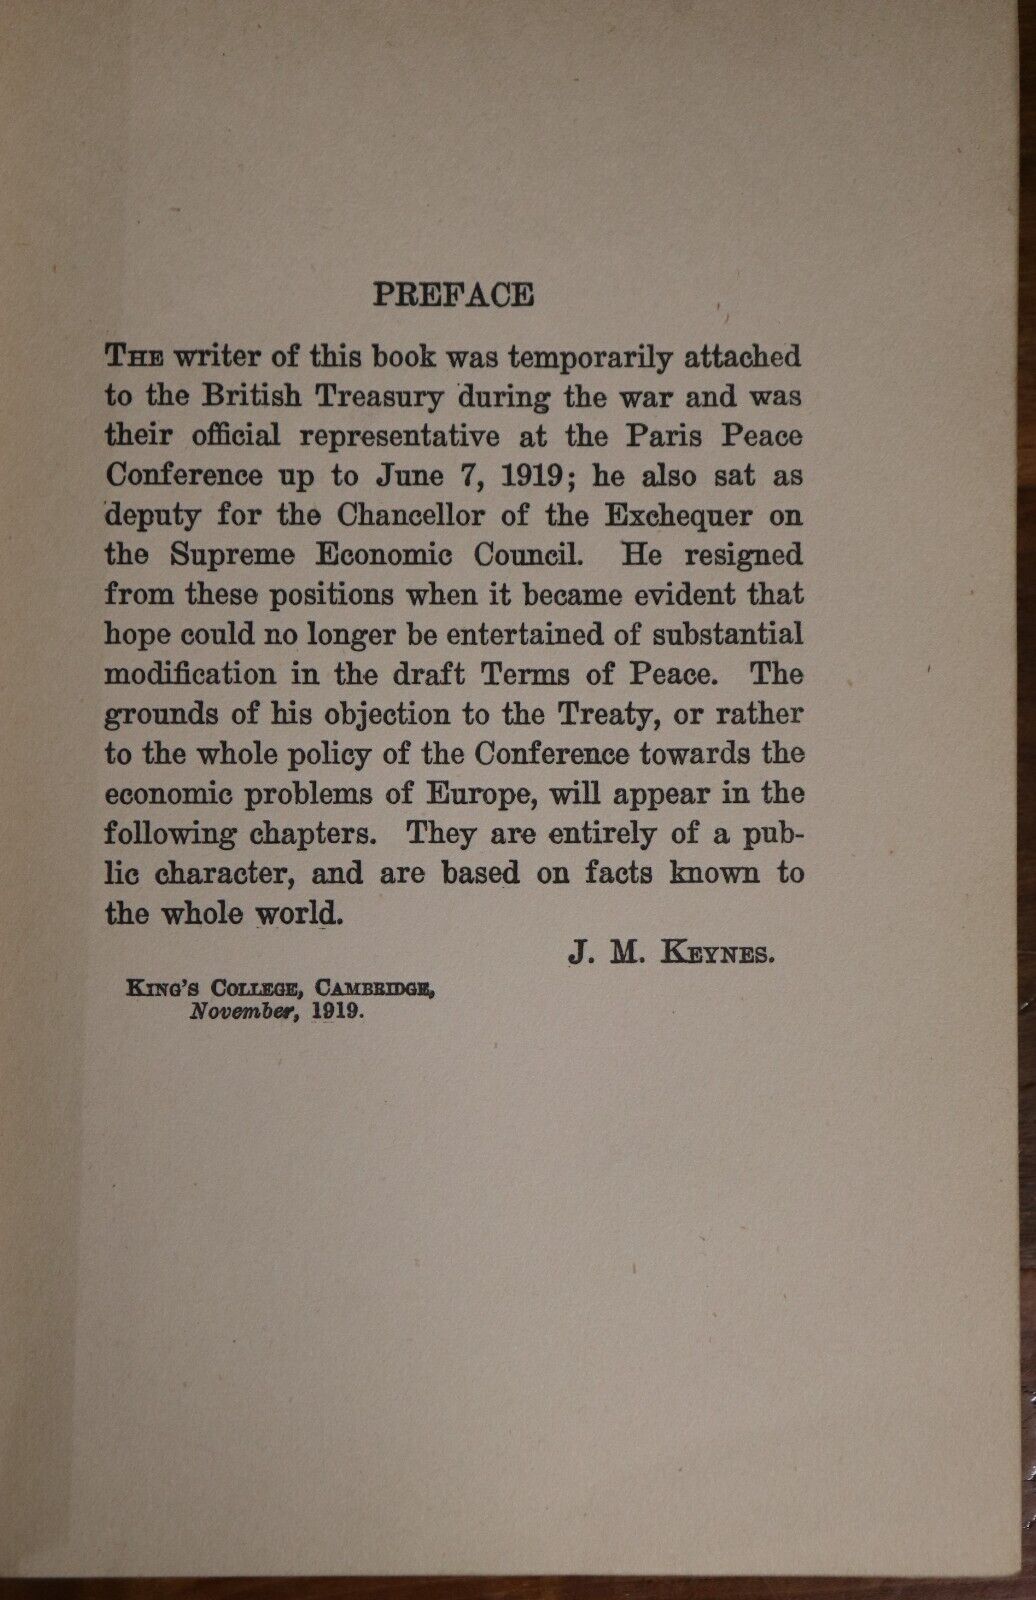 The Economic Consequences Of The Peace - Keynes - 1920 - 1st Ed. Economics Book